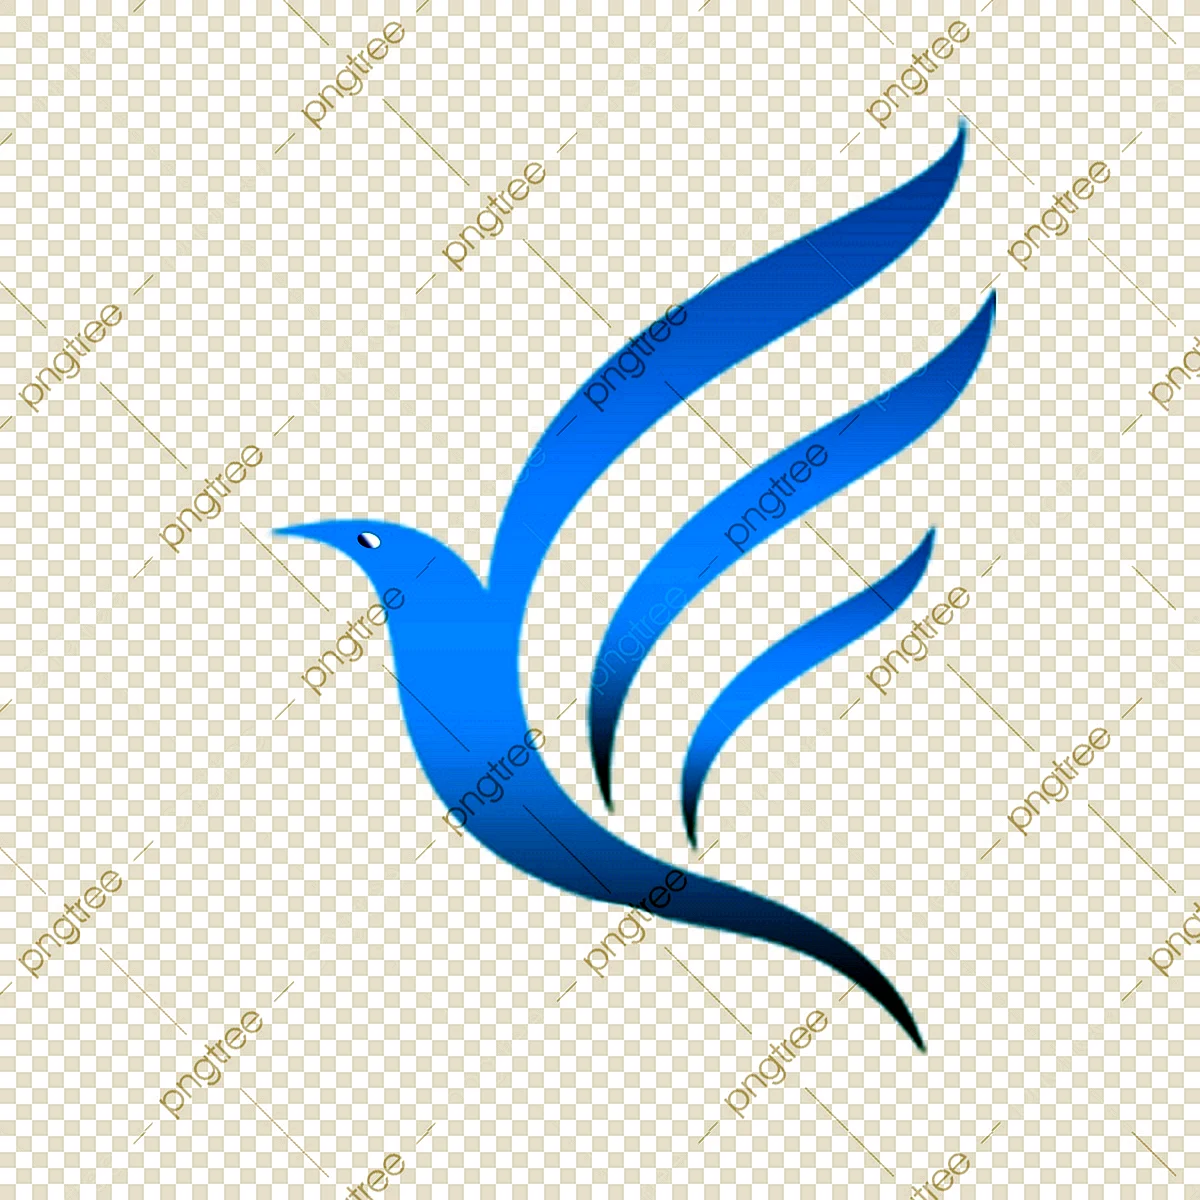 Логотип в виде птицы